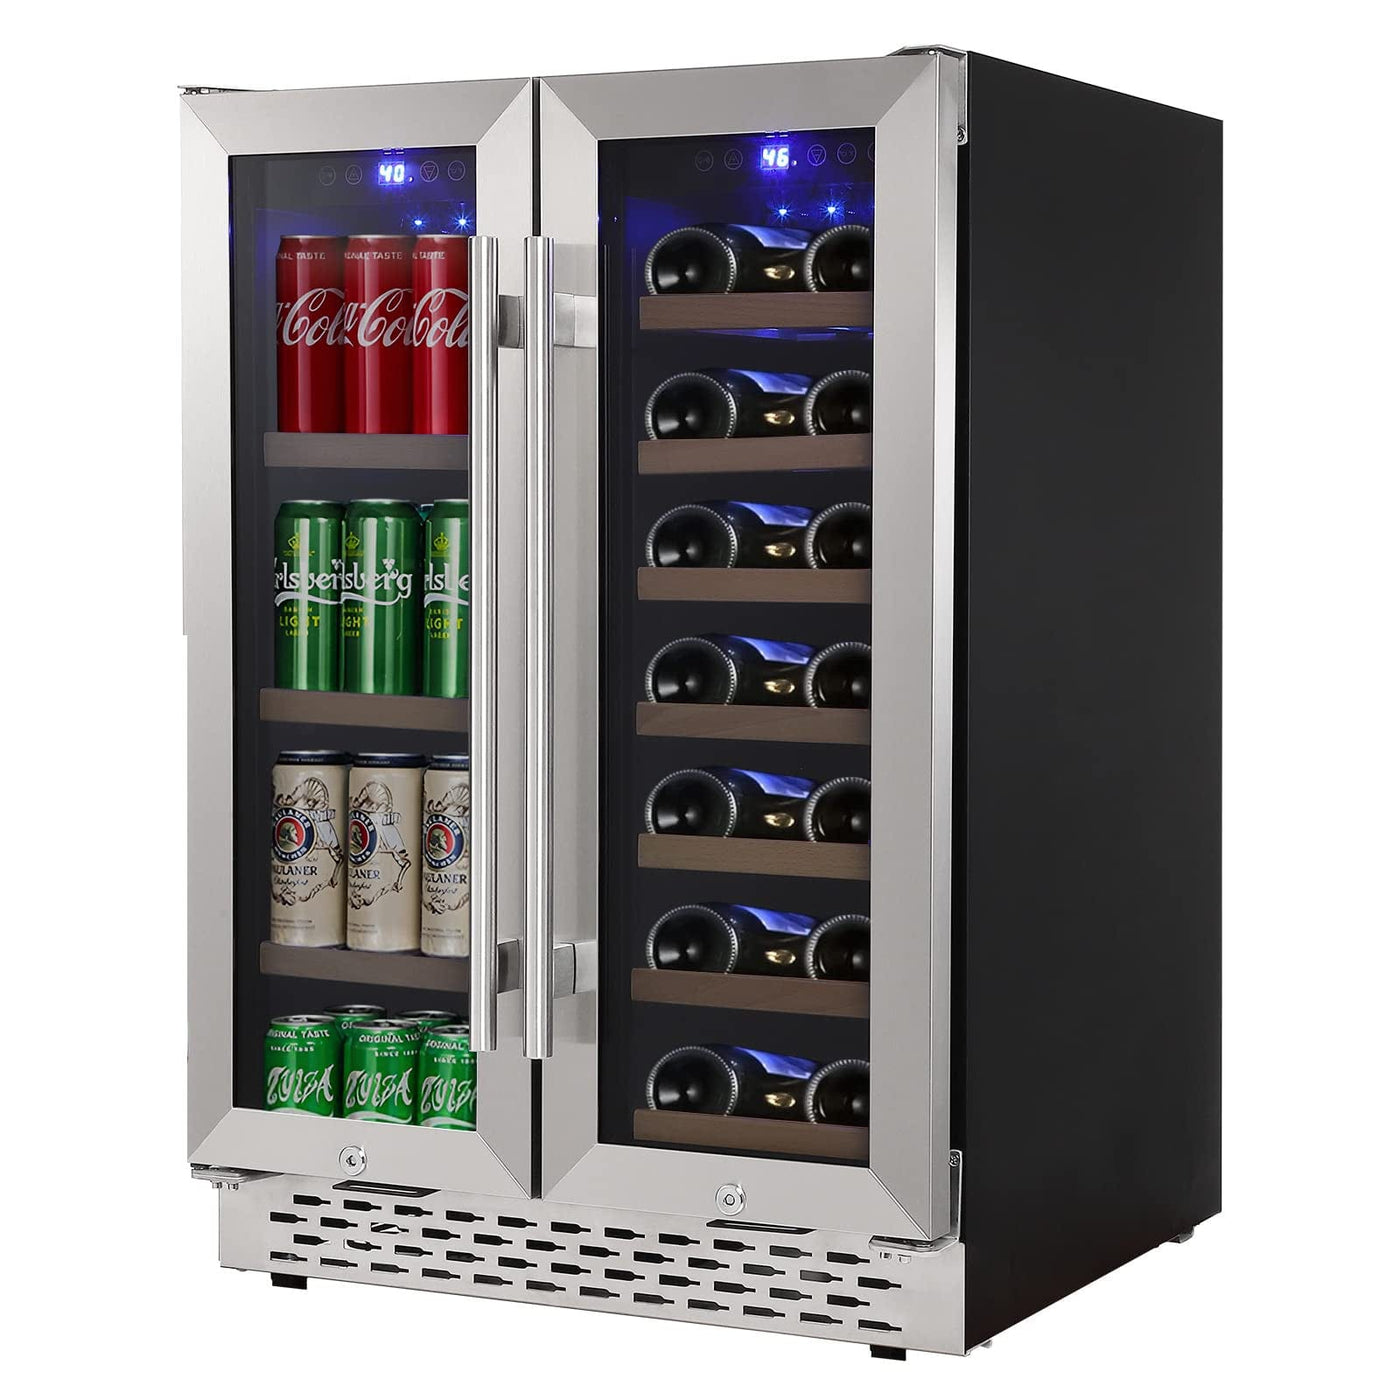 GARVEE 24 Inch Dual Zone Wine and Beverage Refrigerator Wine Cooler with 40 Bottles Wine Capacity